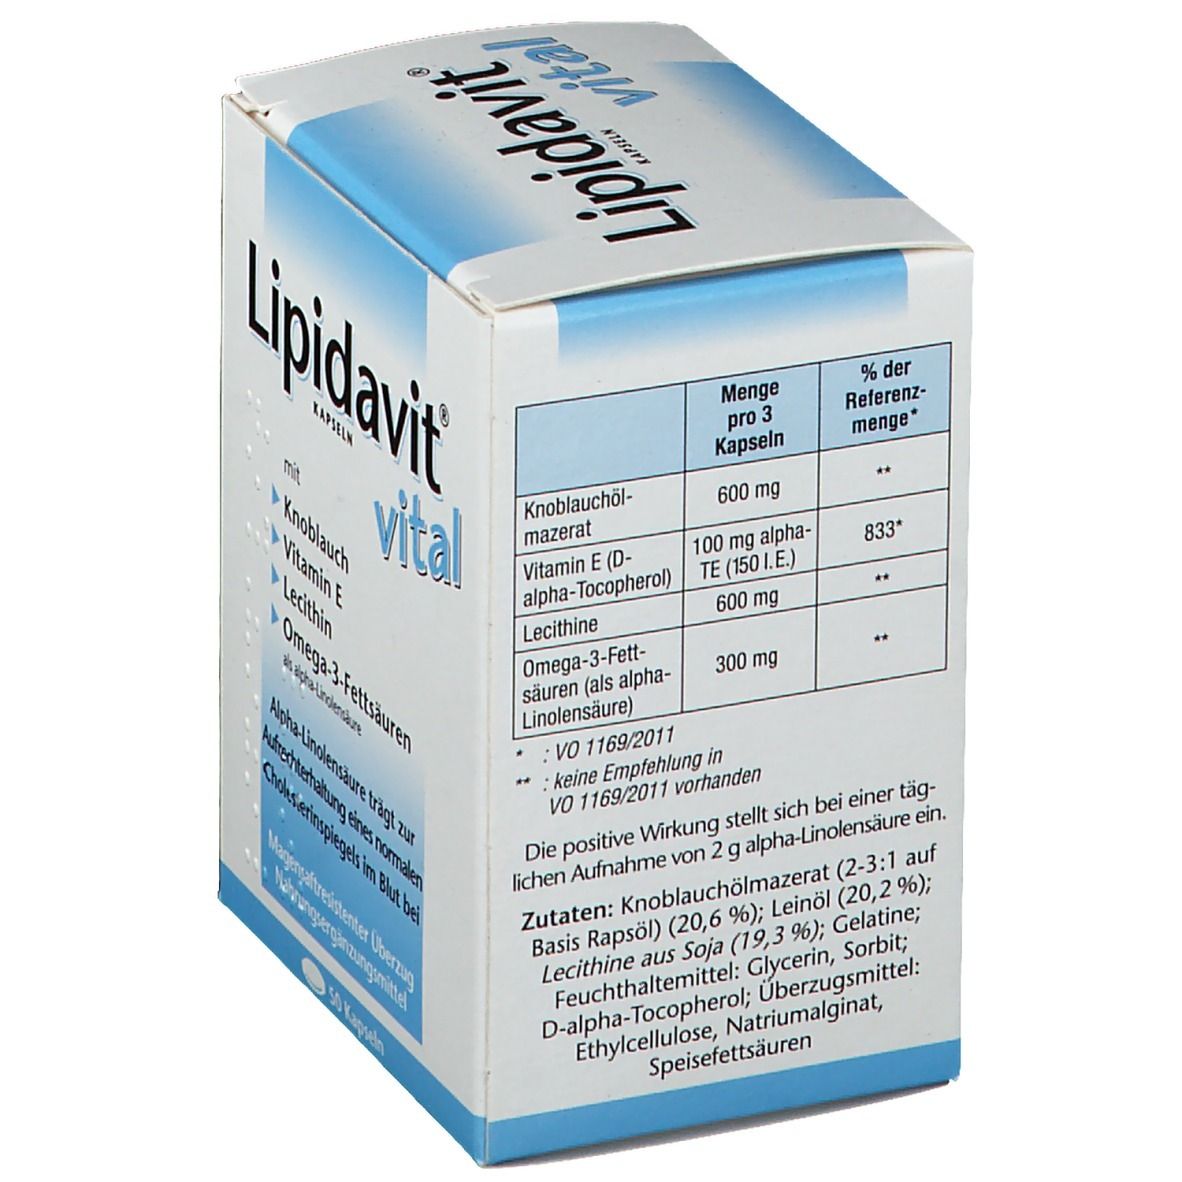 Lipidavit® vital